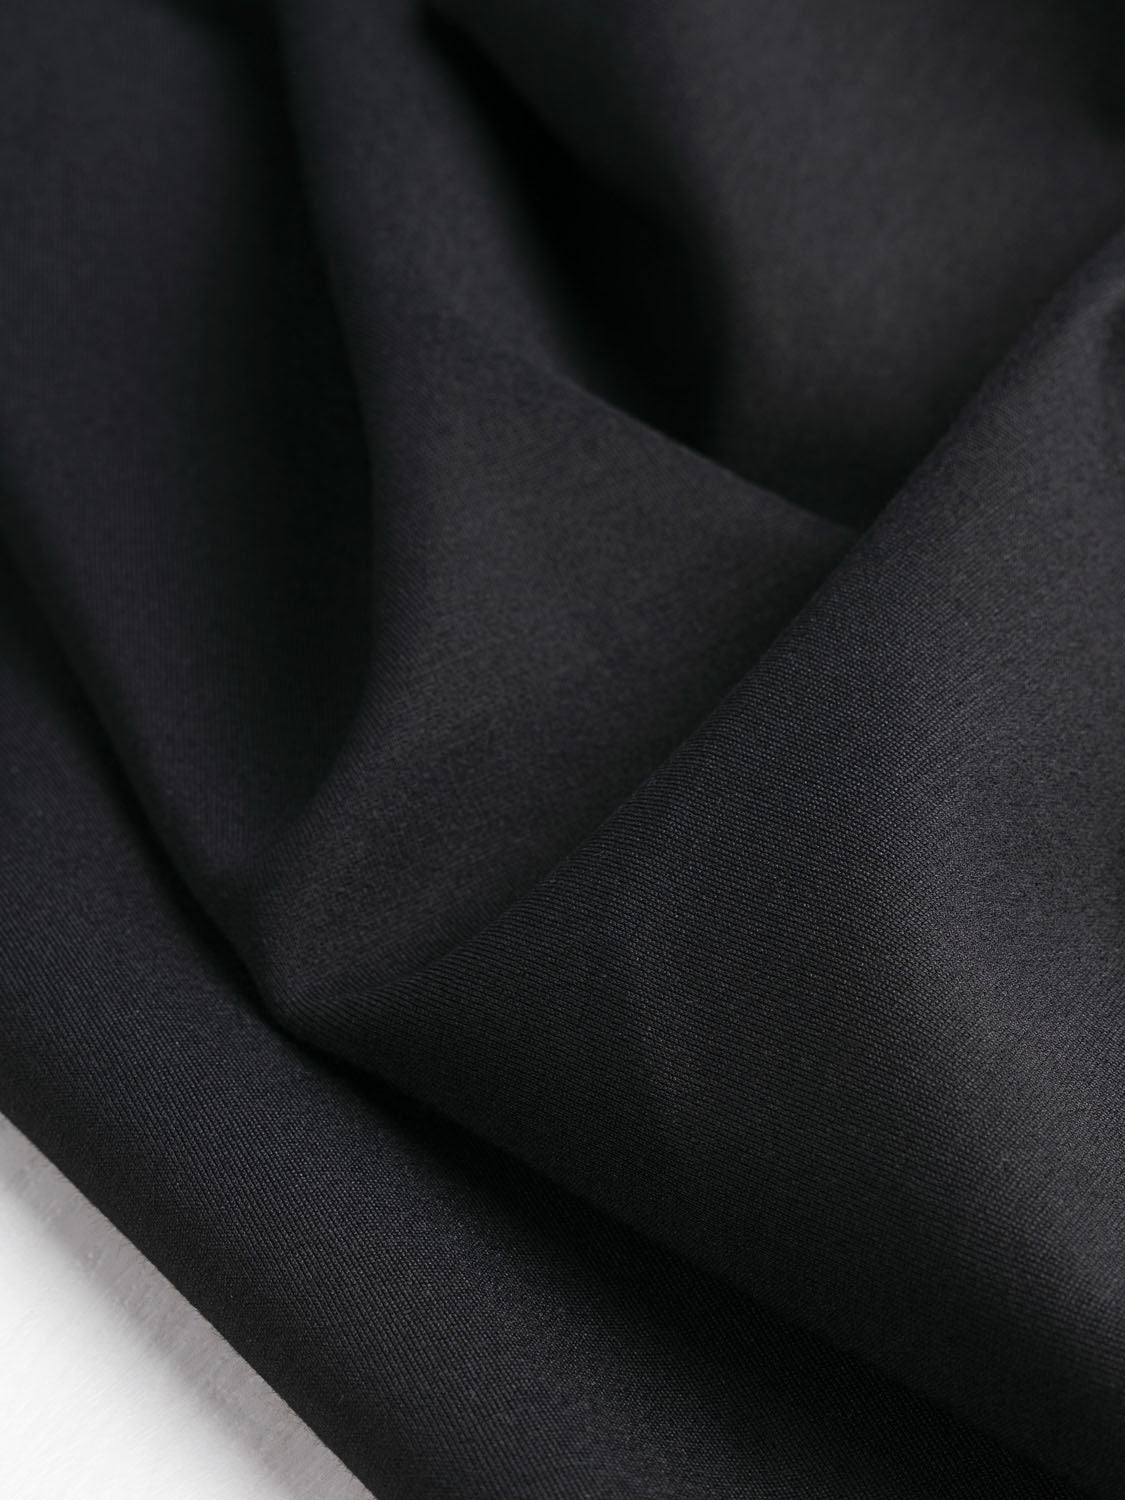 Merino Wool Blend Fabric With Lycra 4 Way Stretch Ponte Knit Interlock  350gsm Charcoal Heather EZ19 